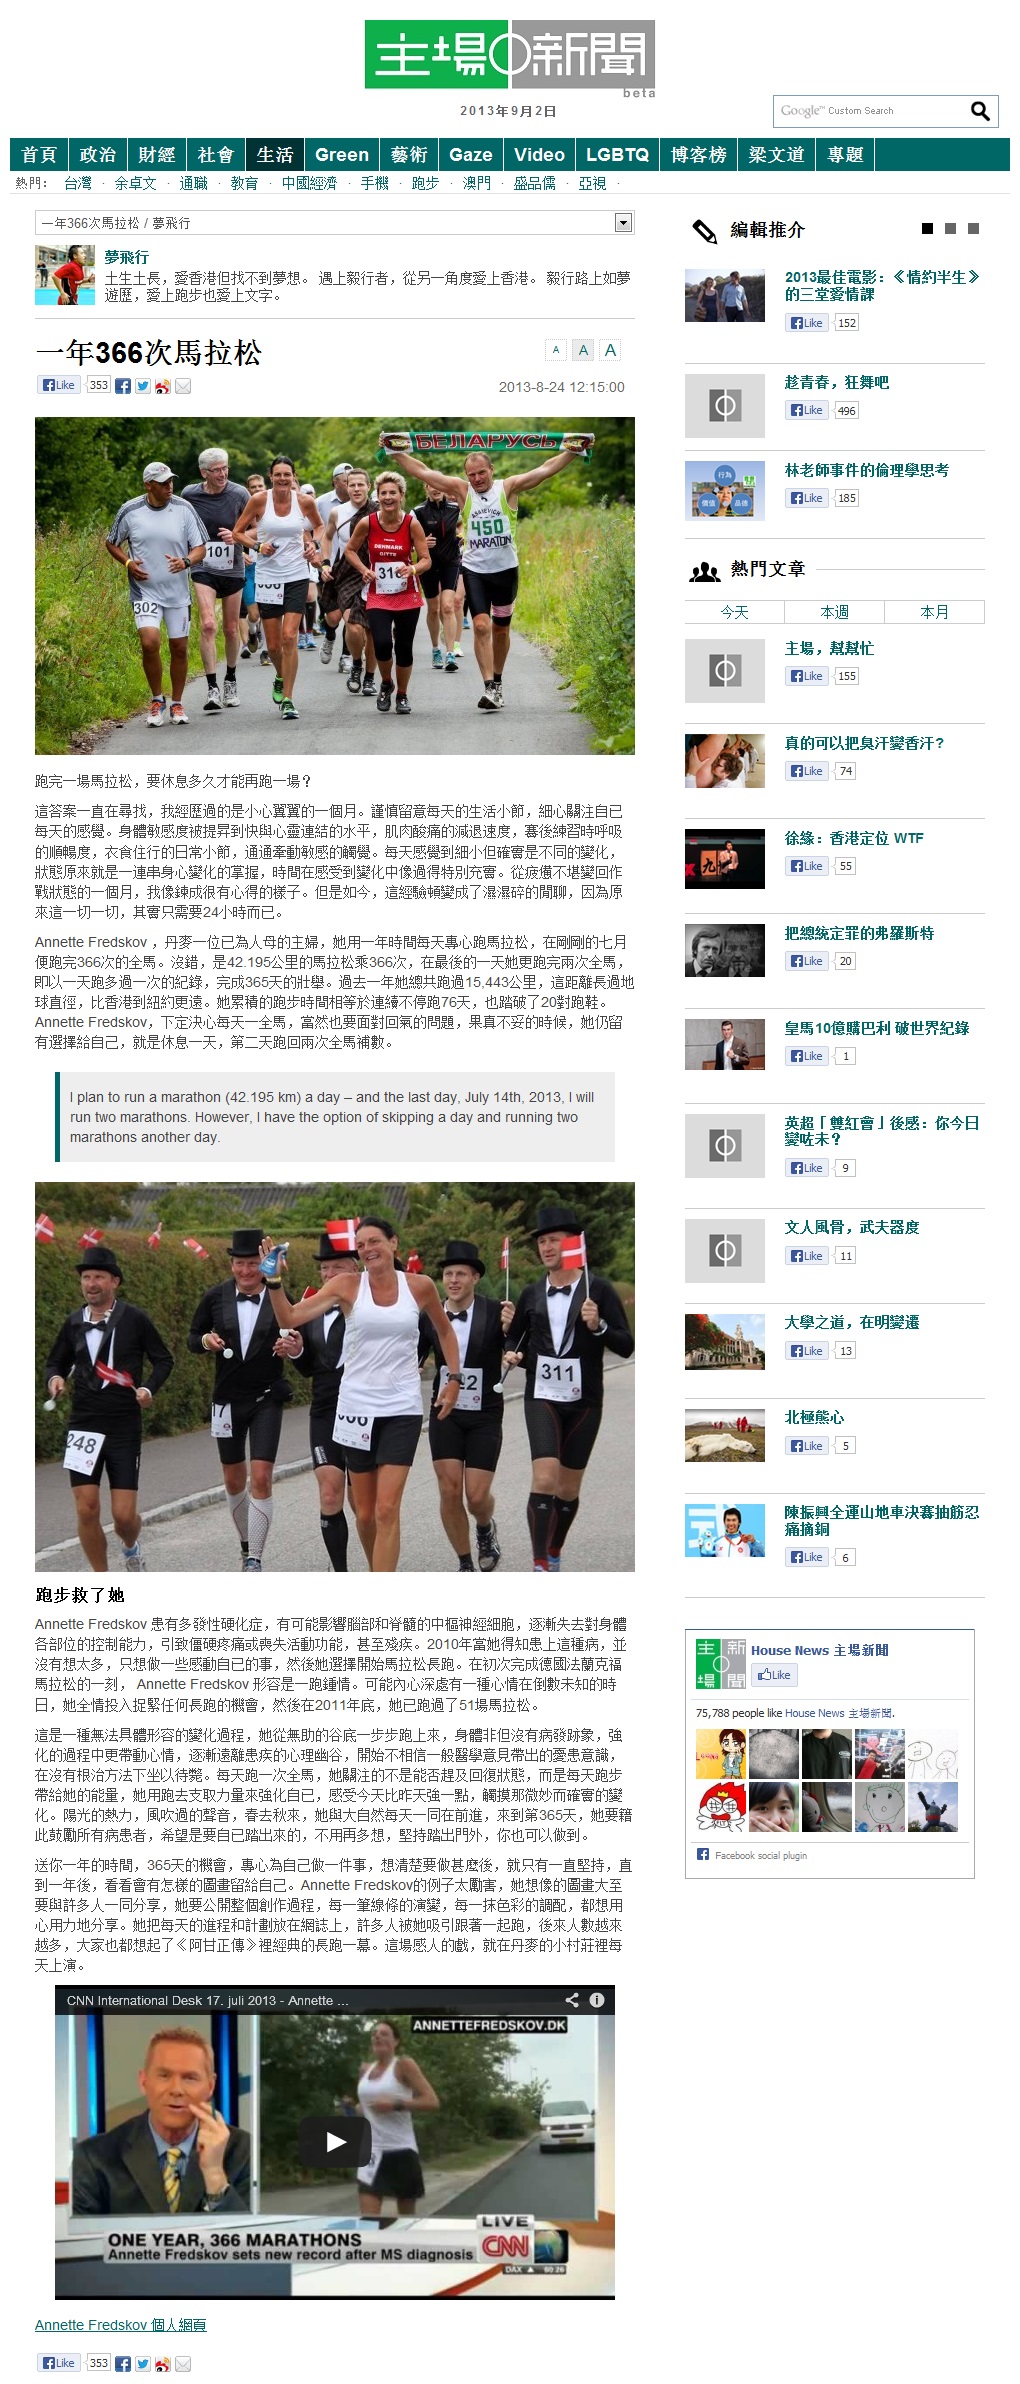 thehousenews.com 2013.08.24 kinesisk